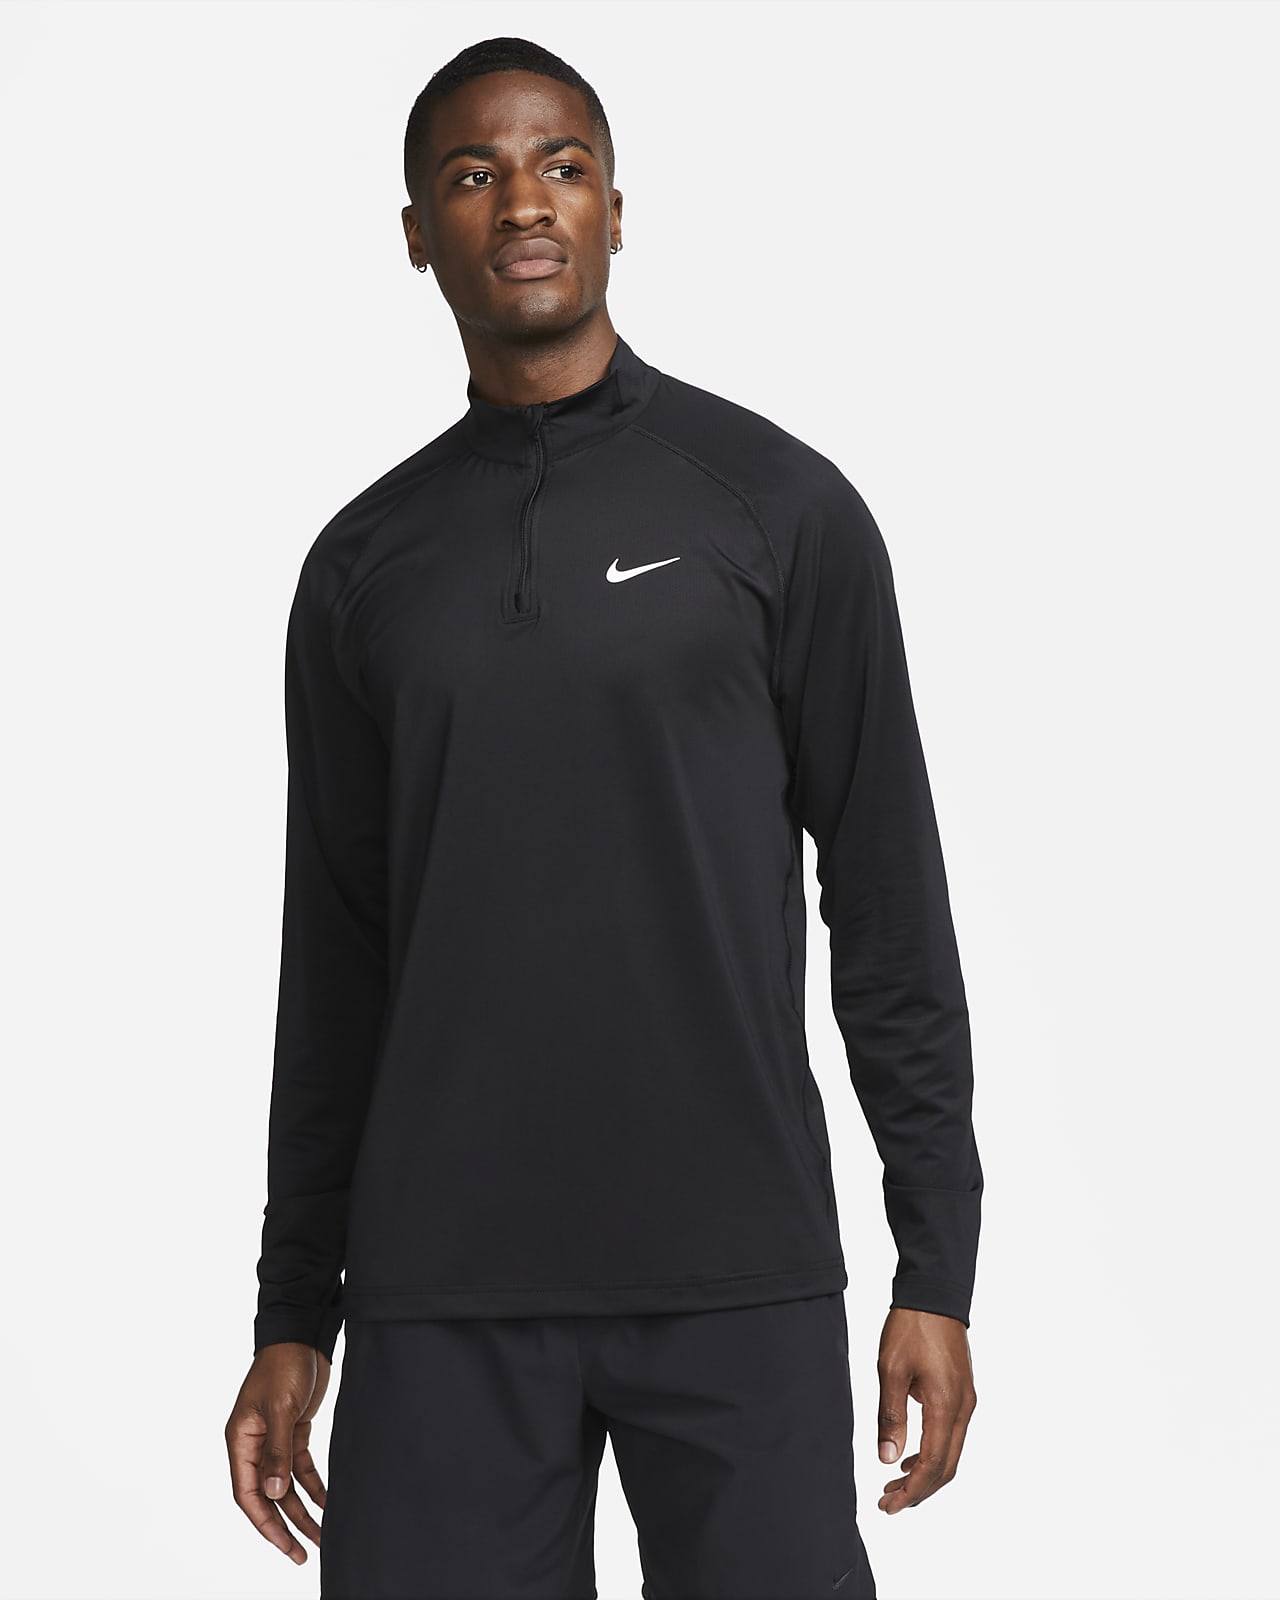 Nike Ready Men's Dri-FIT 1/4-Zip Fitness Top.